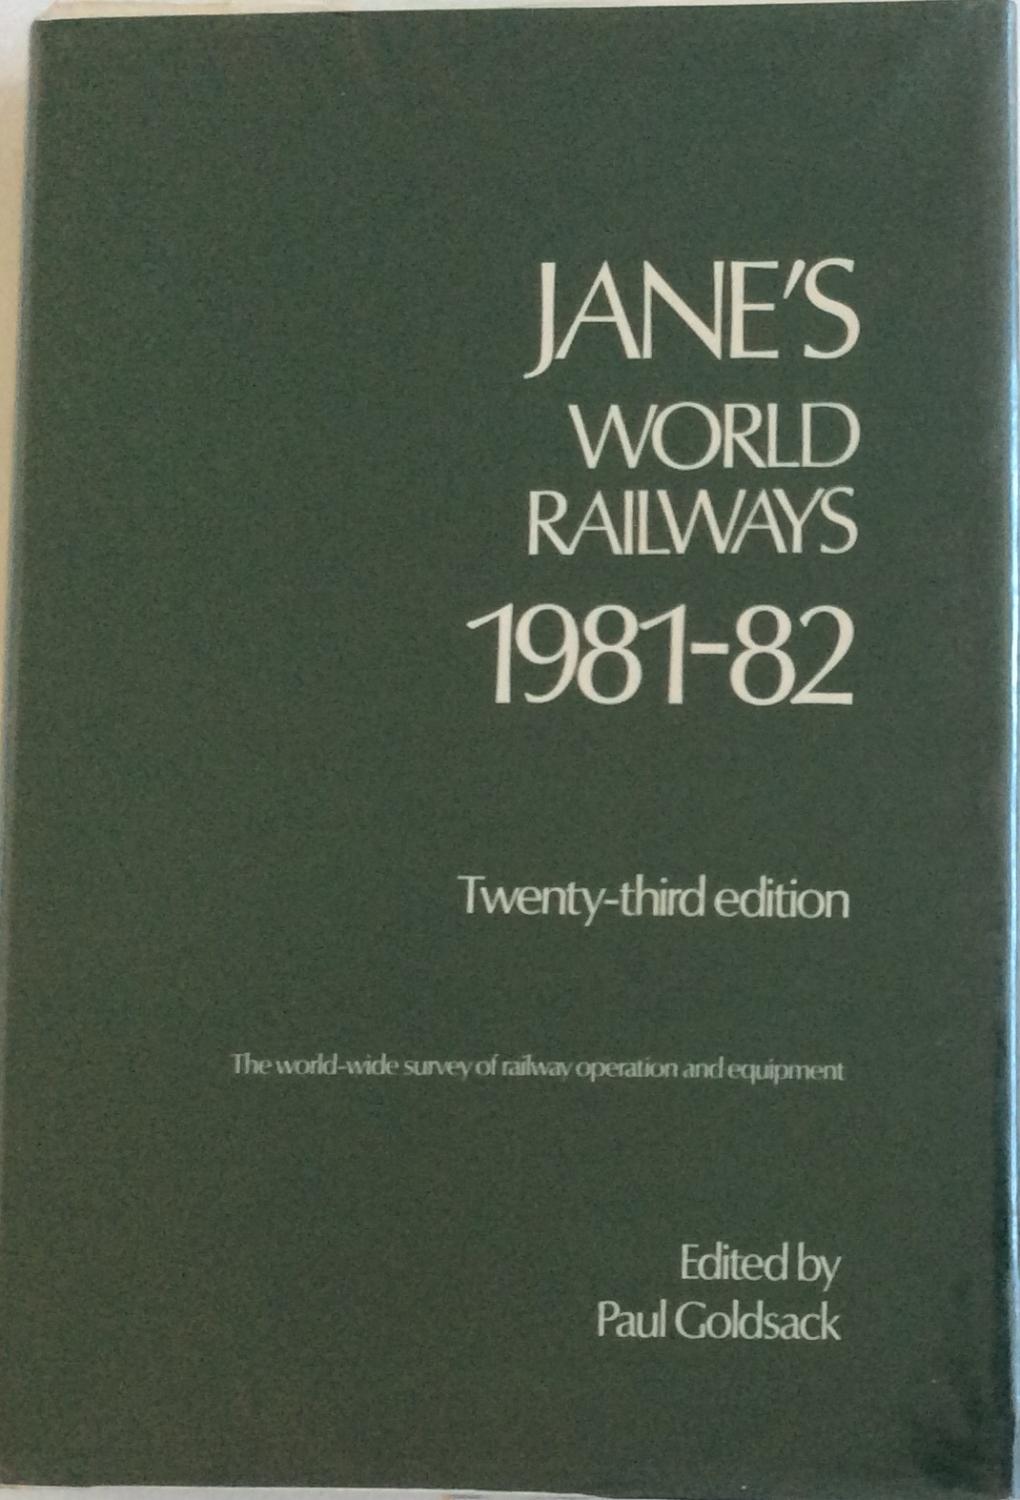 JANE'S WORLD RAILWAYS - Paul Goldsack (Ed)